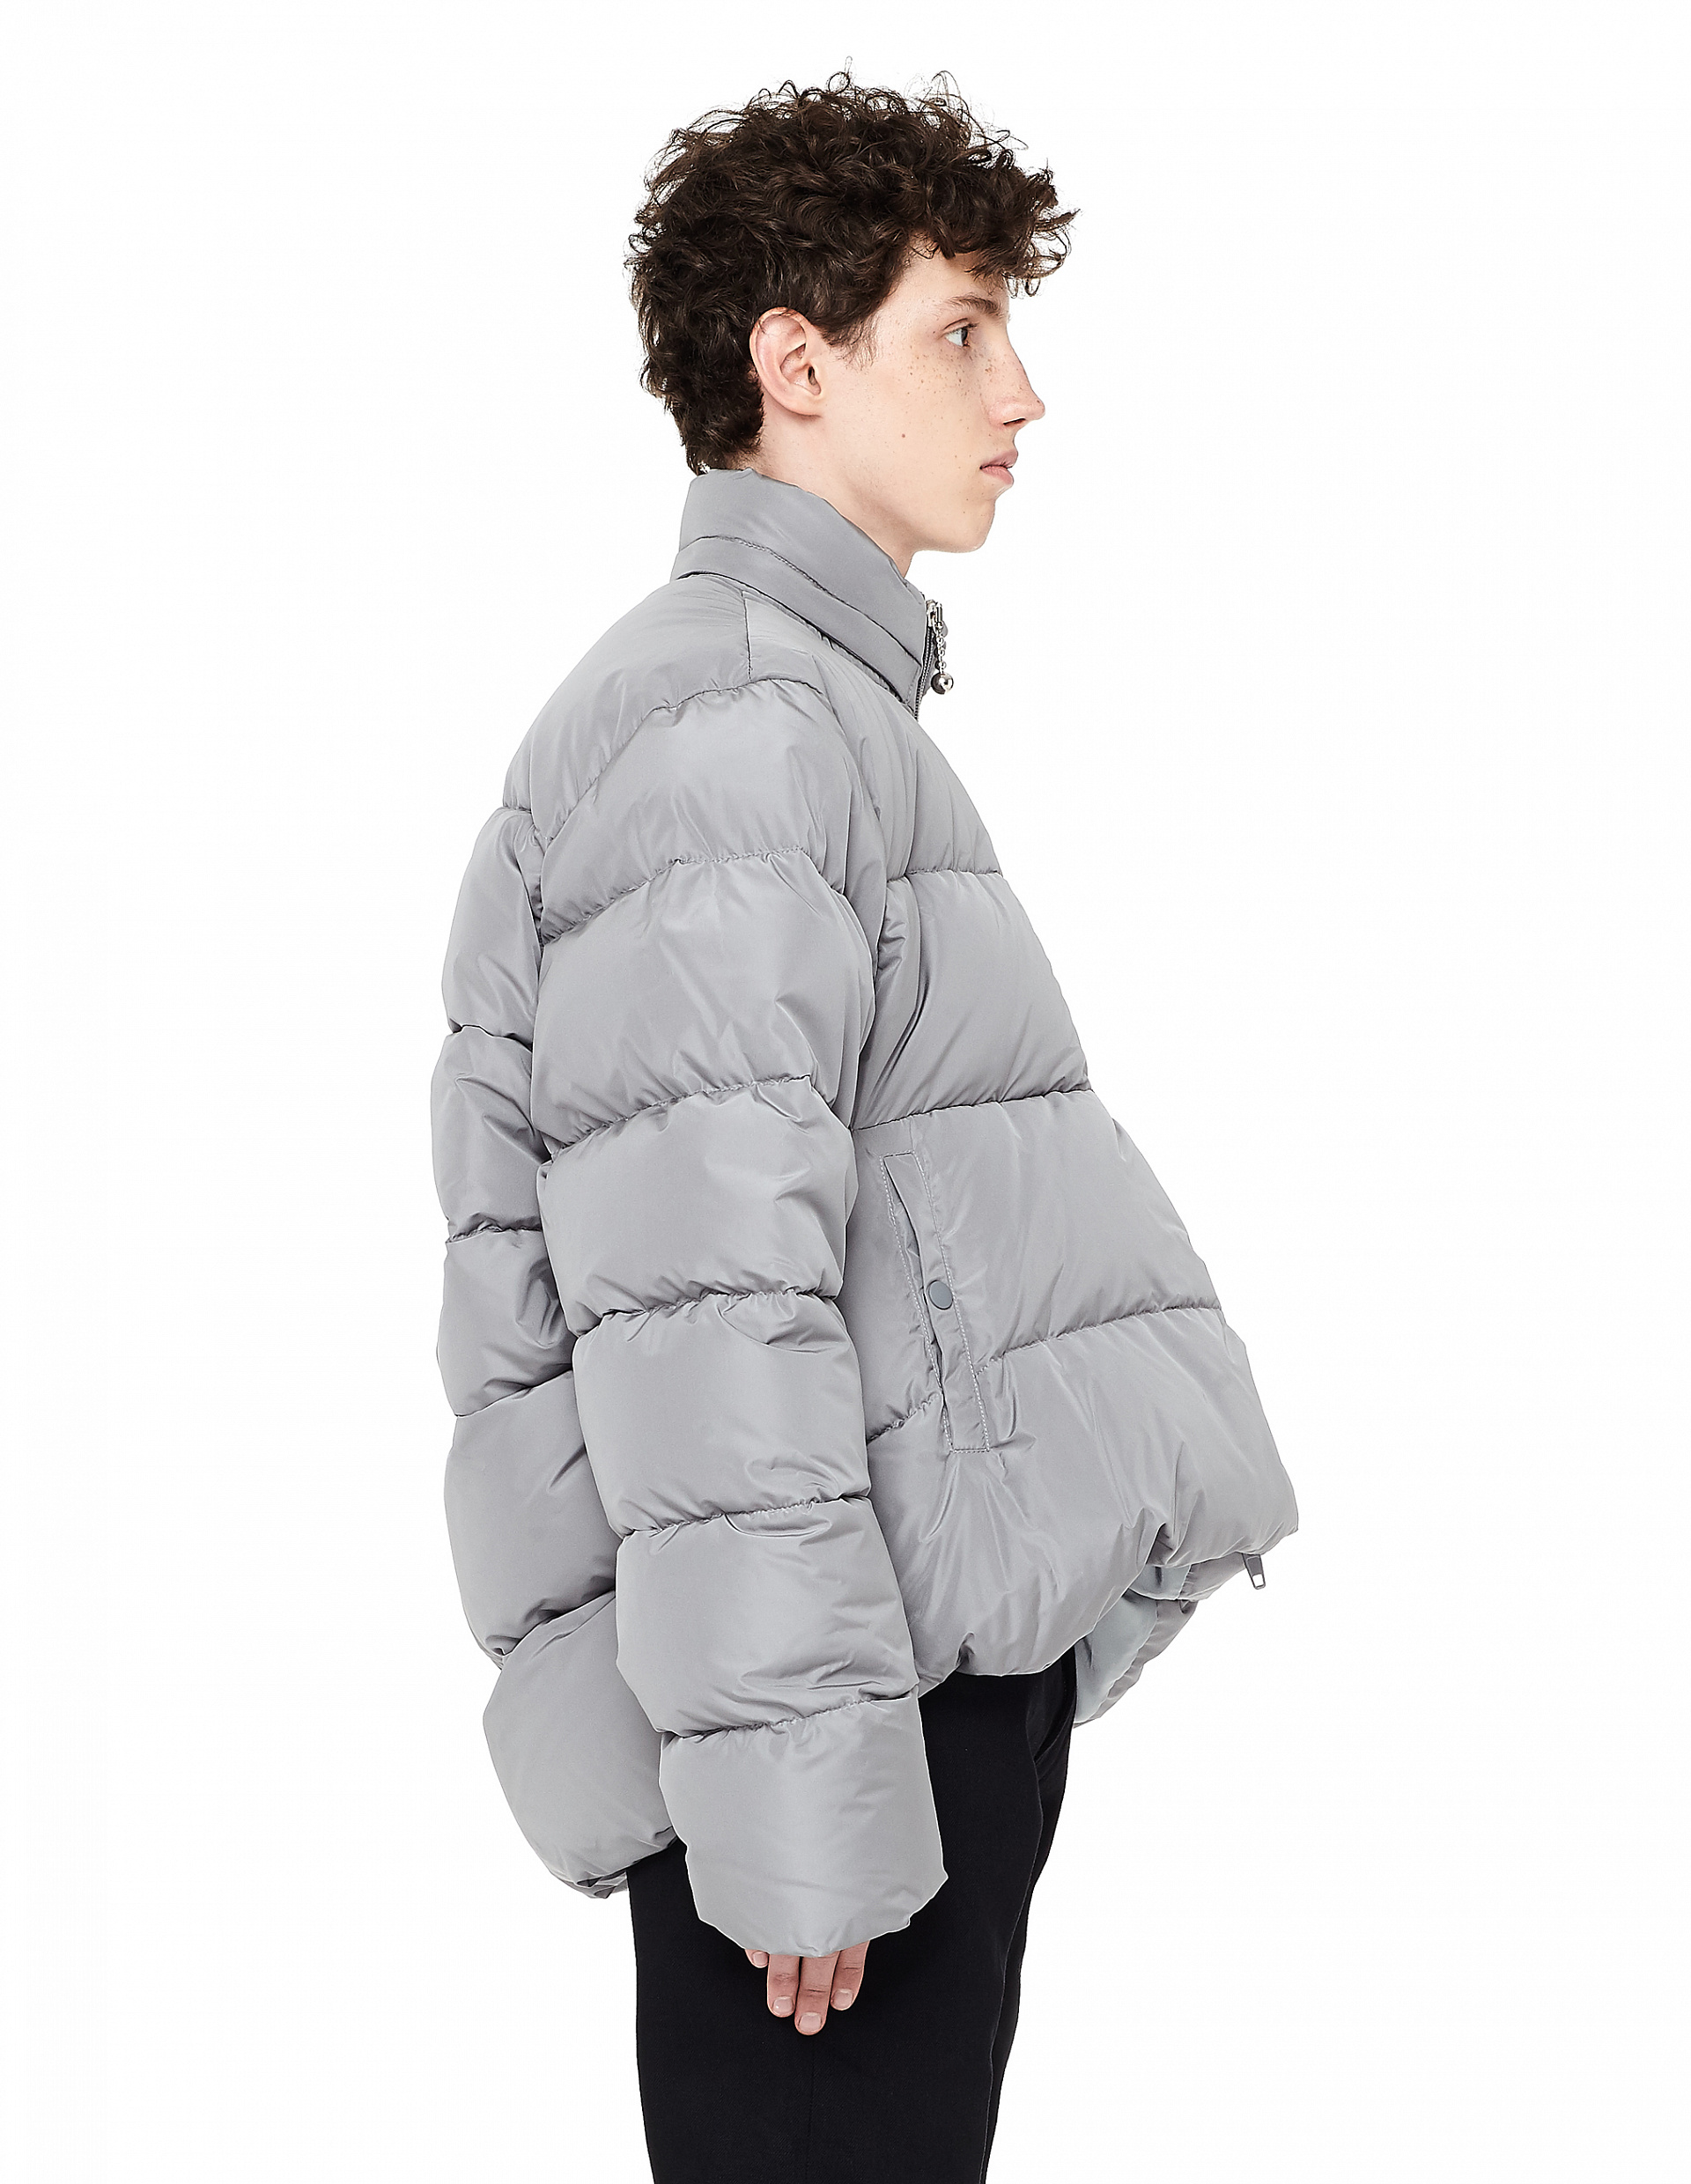 Buy Balenciaga men grey c shape puffer jacket for $1,271 online on